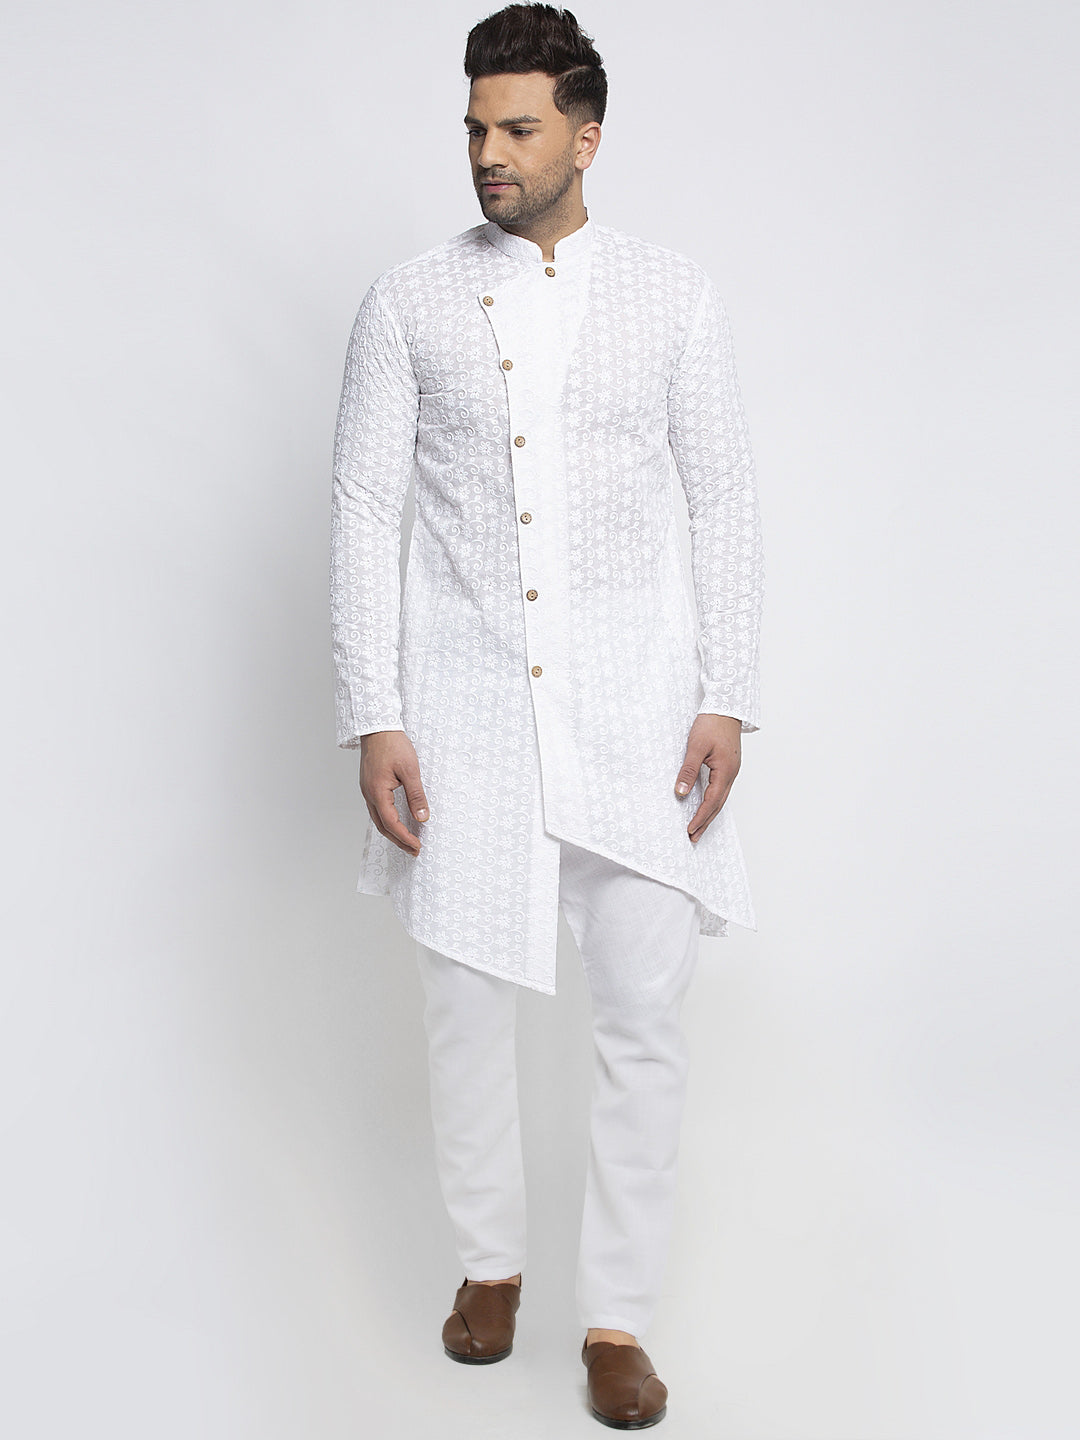 Designer Cotton Aligarh White Kurta Pajama Set For Men By Treemoda